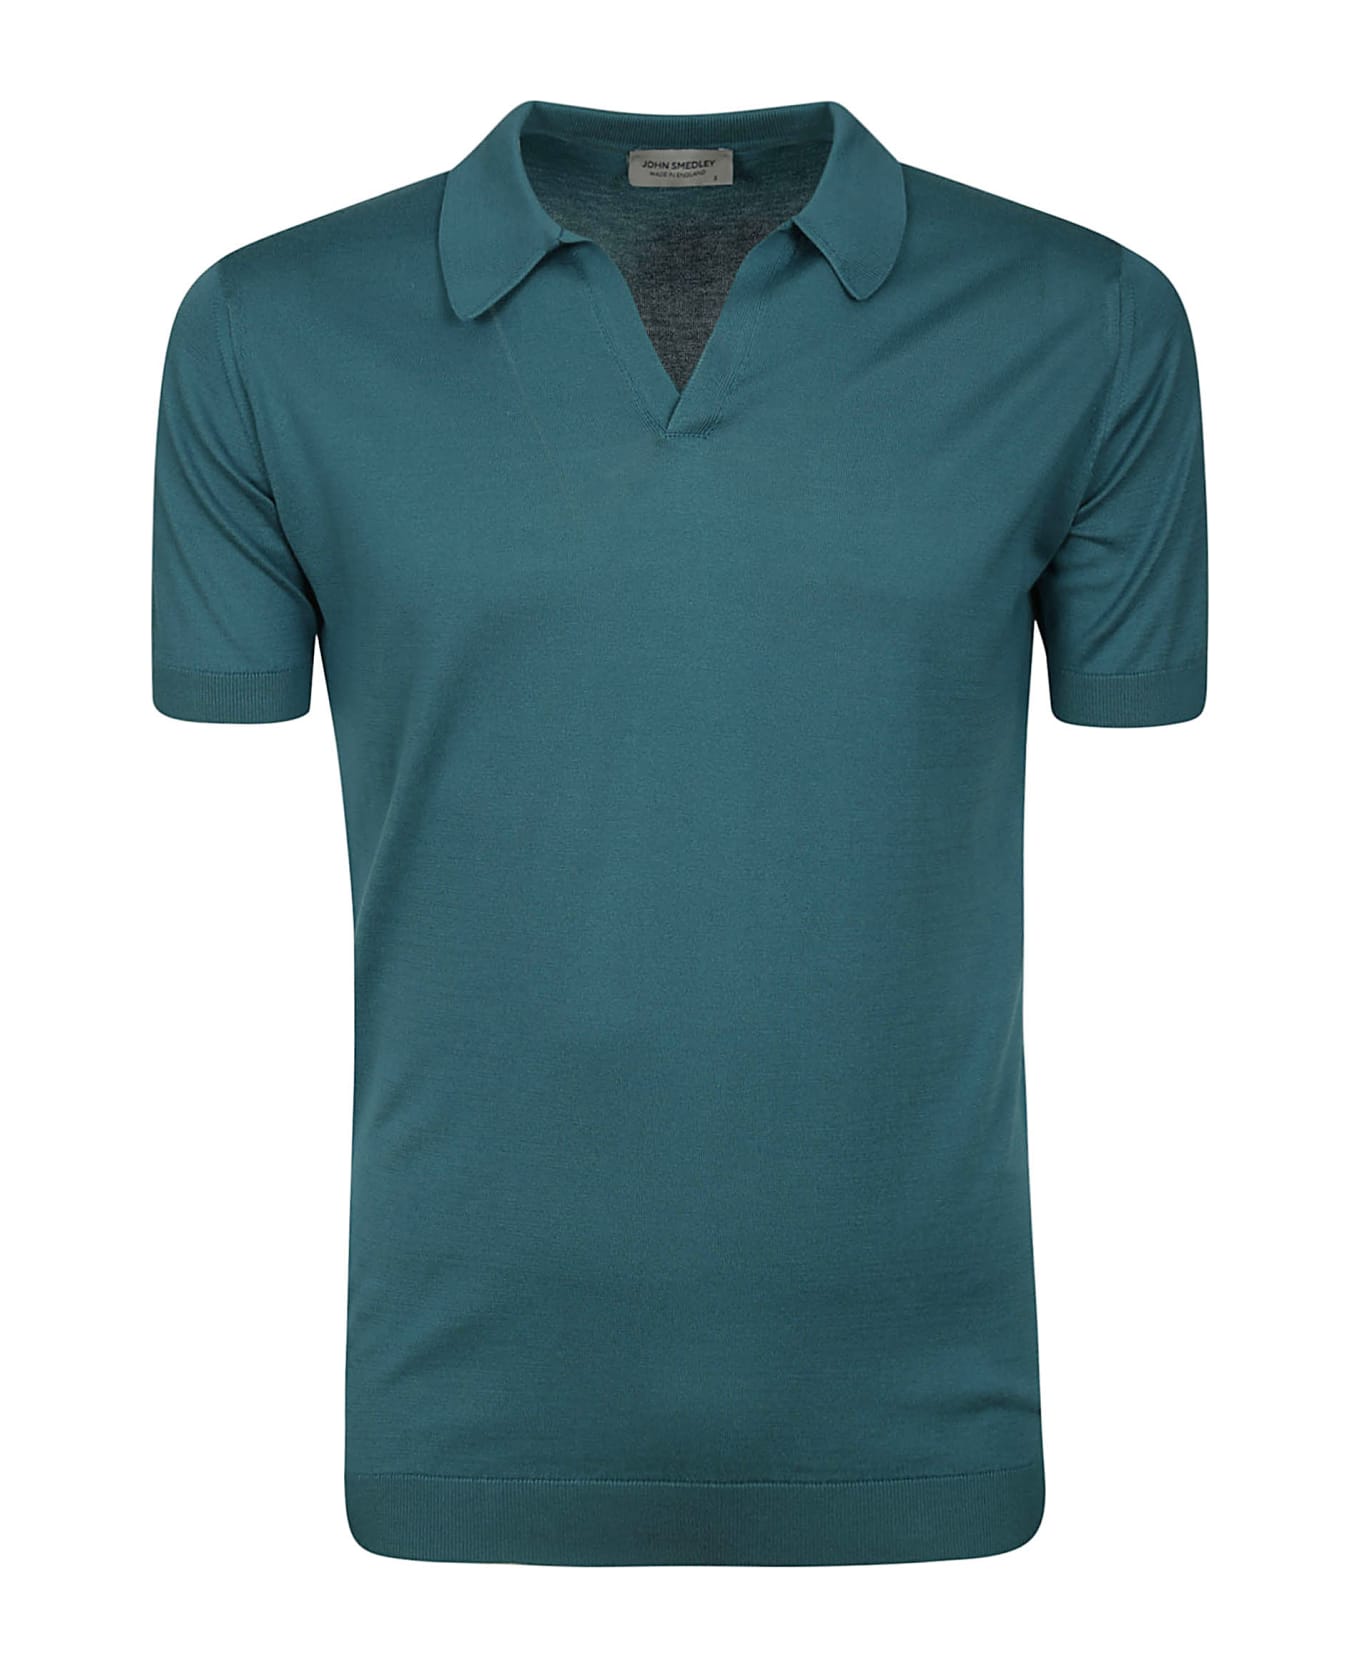 John Smedley Noah Skipper Collar Shirt Ss - Atoll Teal ポロシャツ